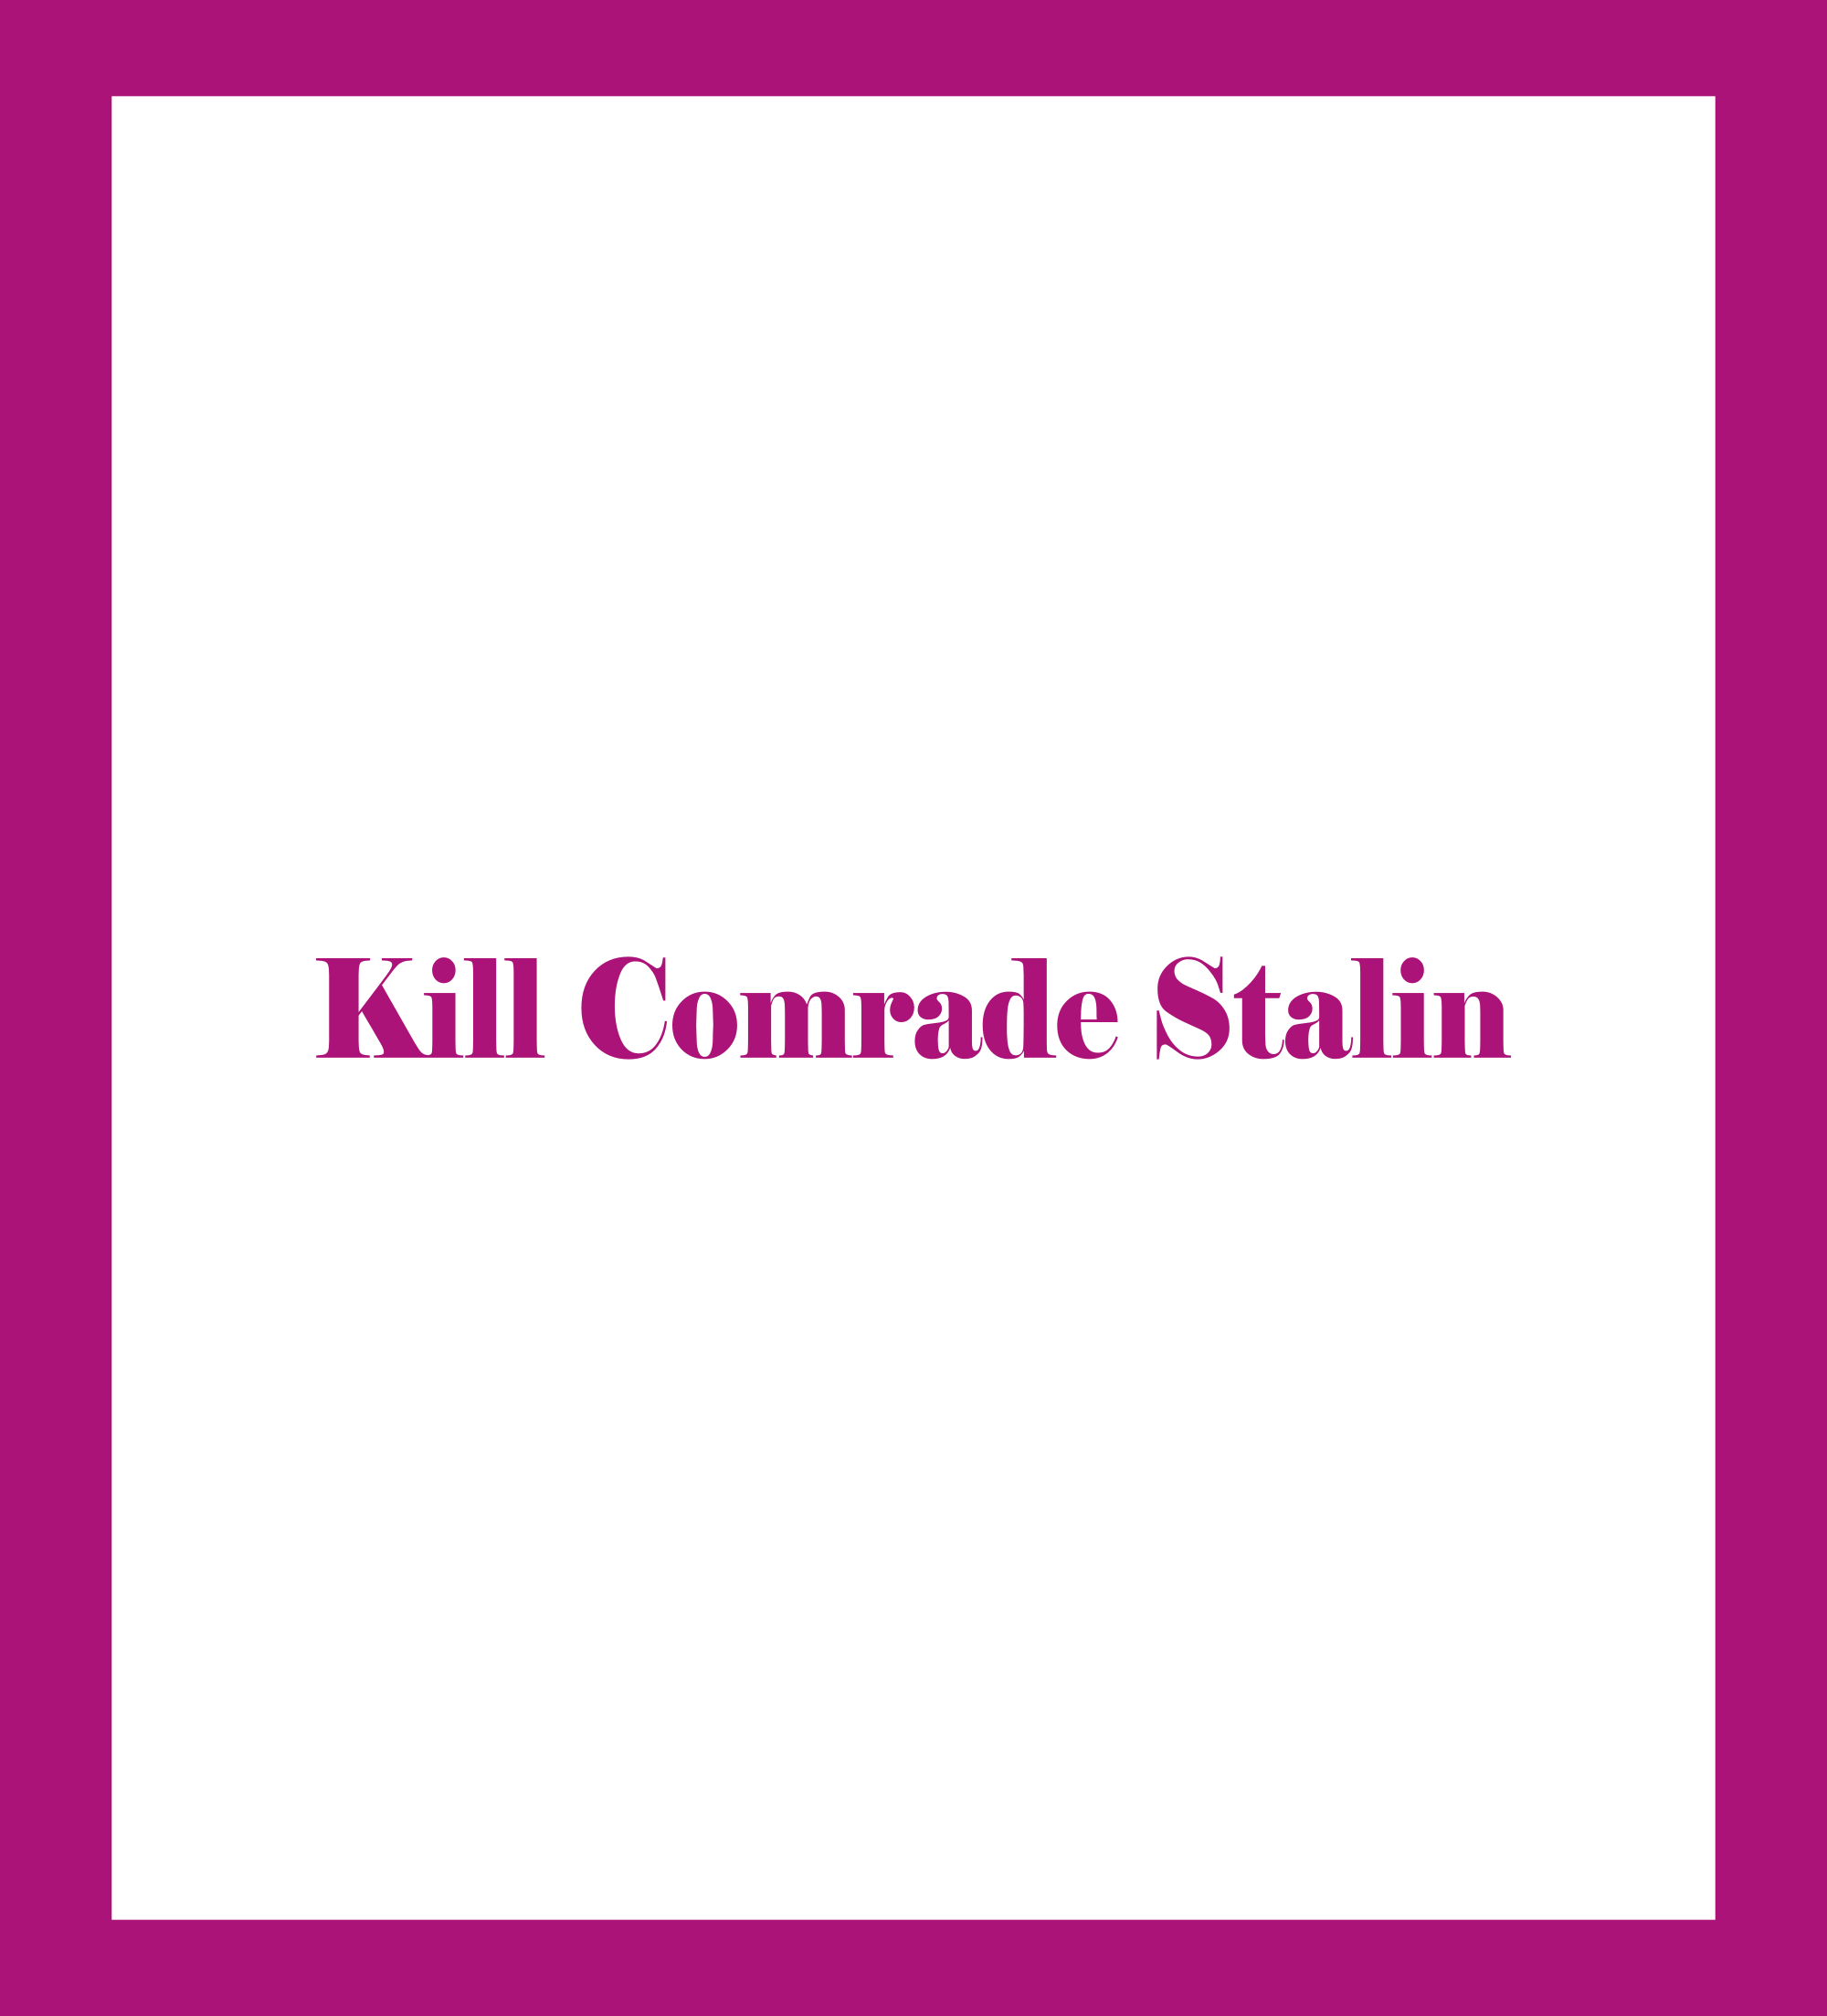 Caratula de Kill Comrade Stalin (Matar al camarada Stalin) 